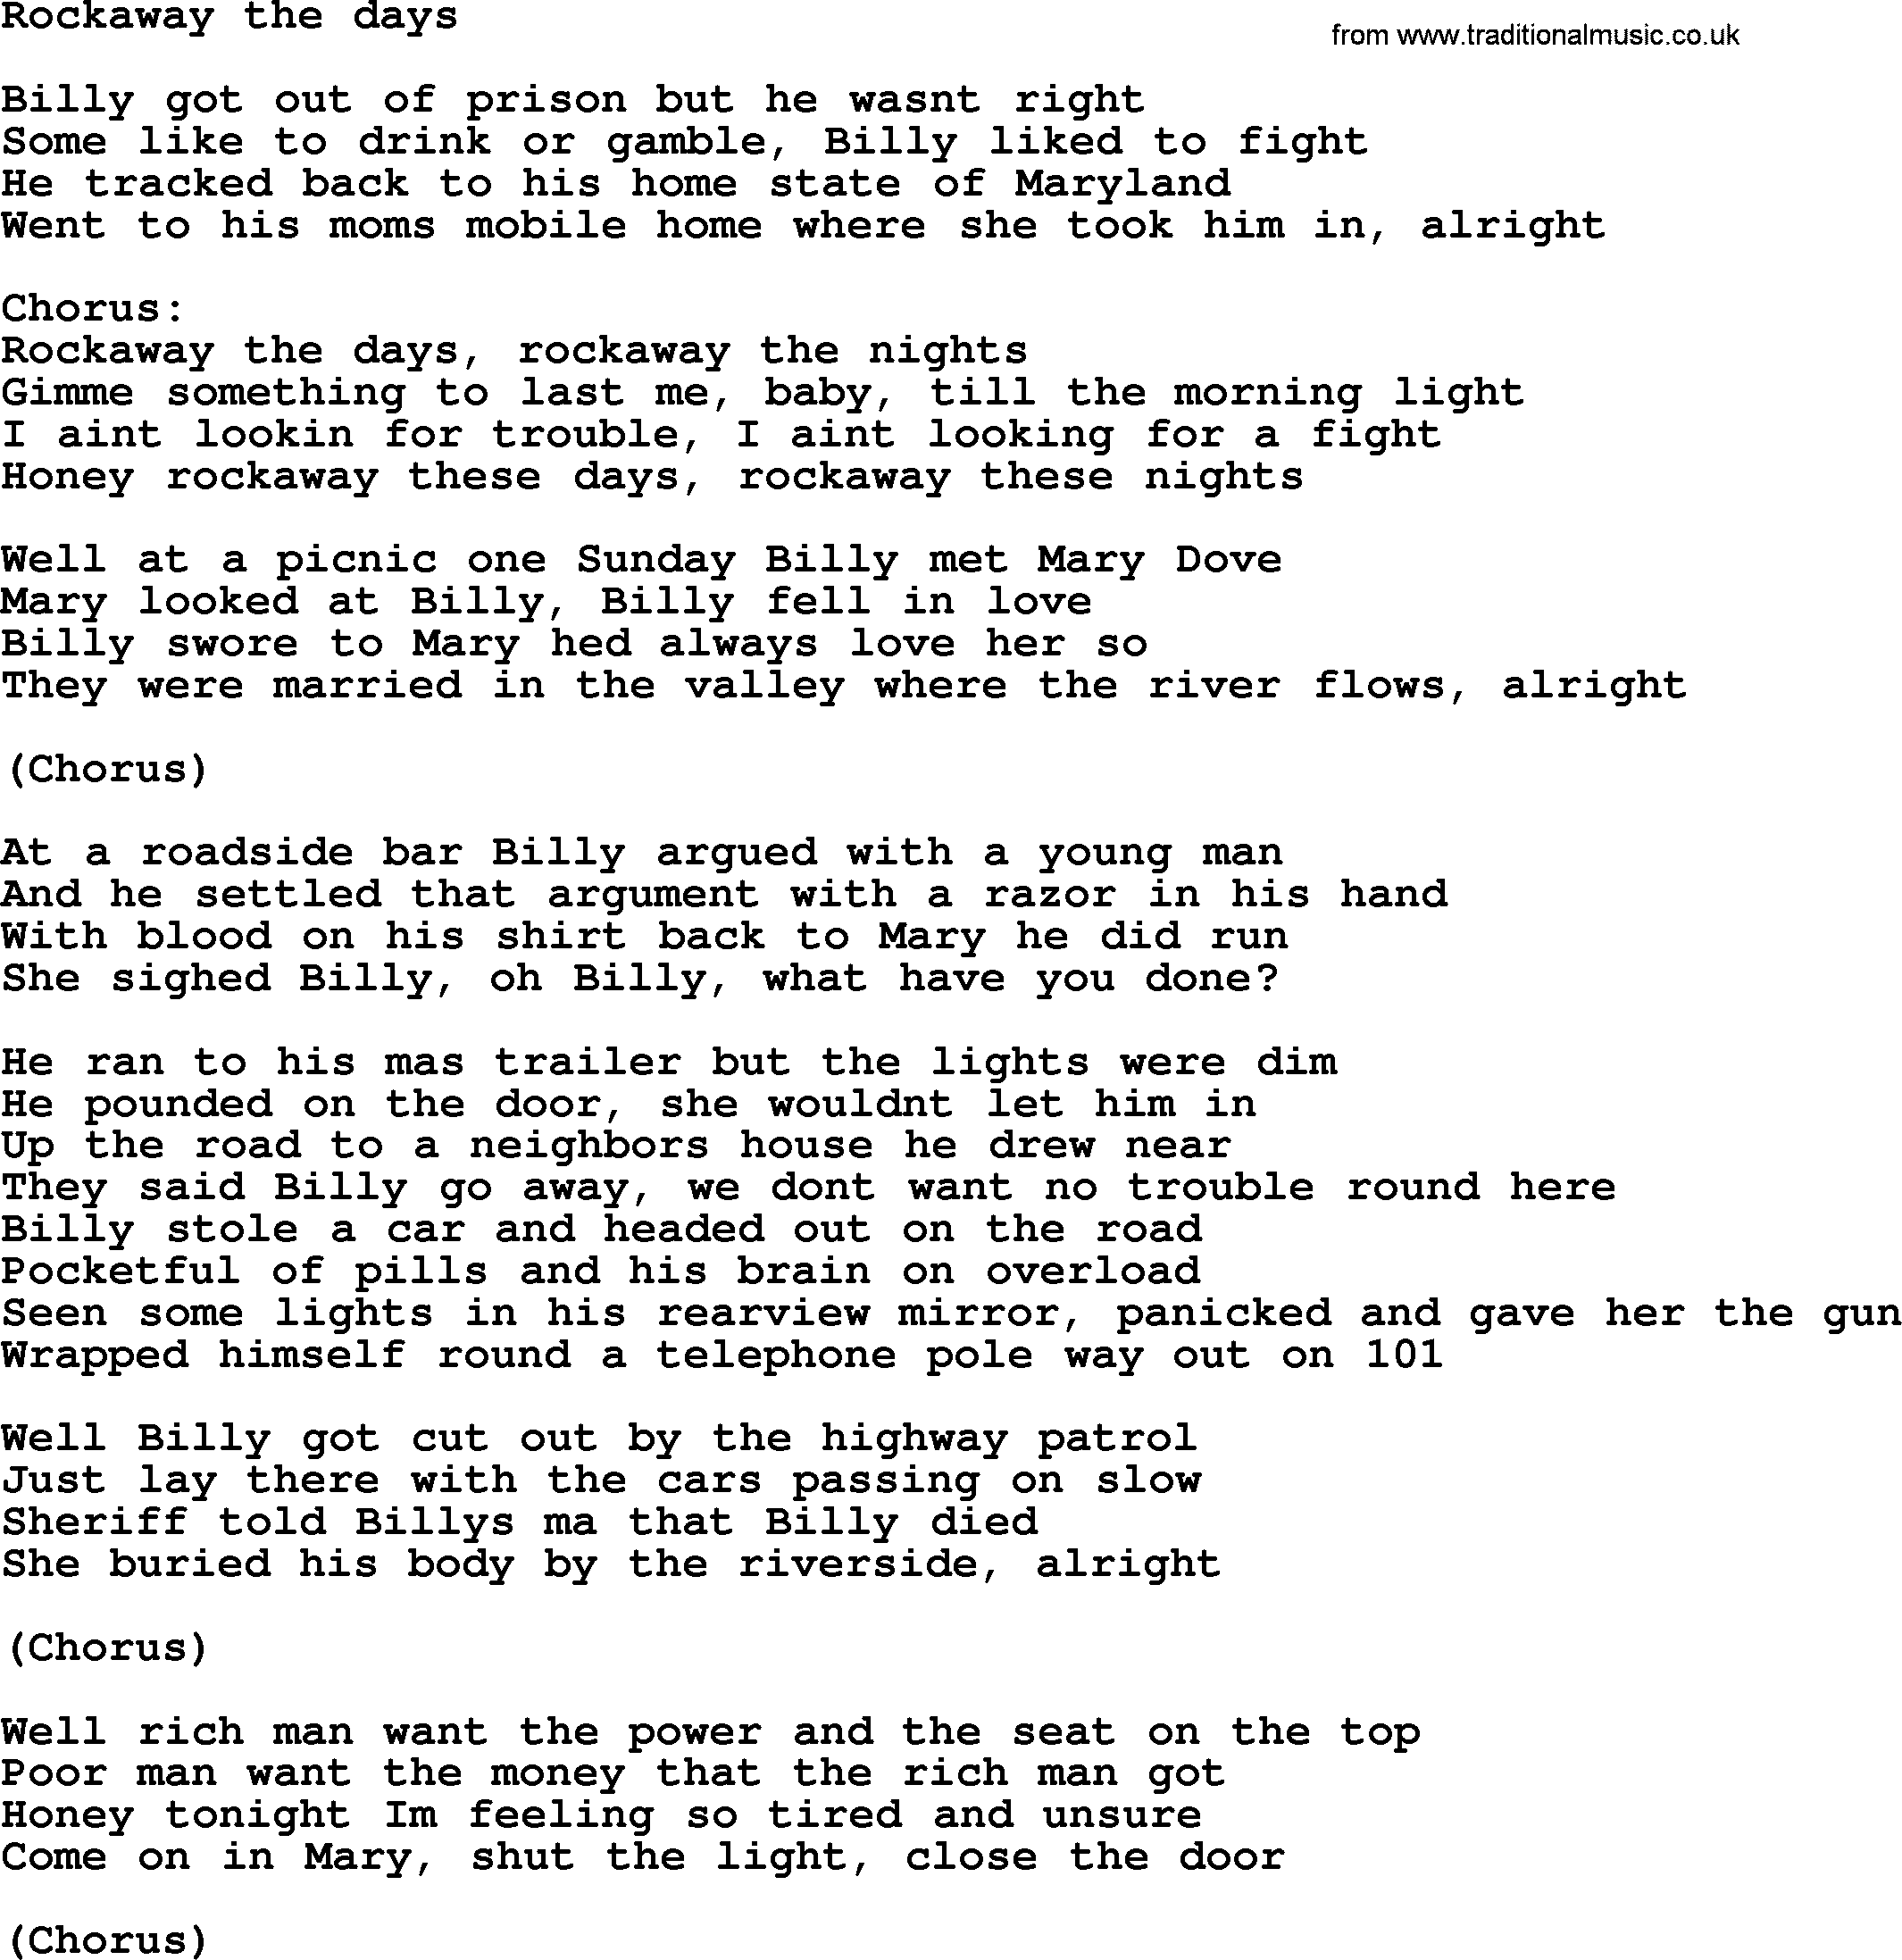 Bruce Springsteen song: Rockaway The Days lyrics